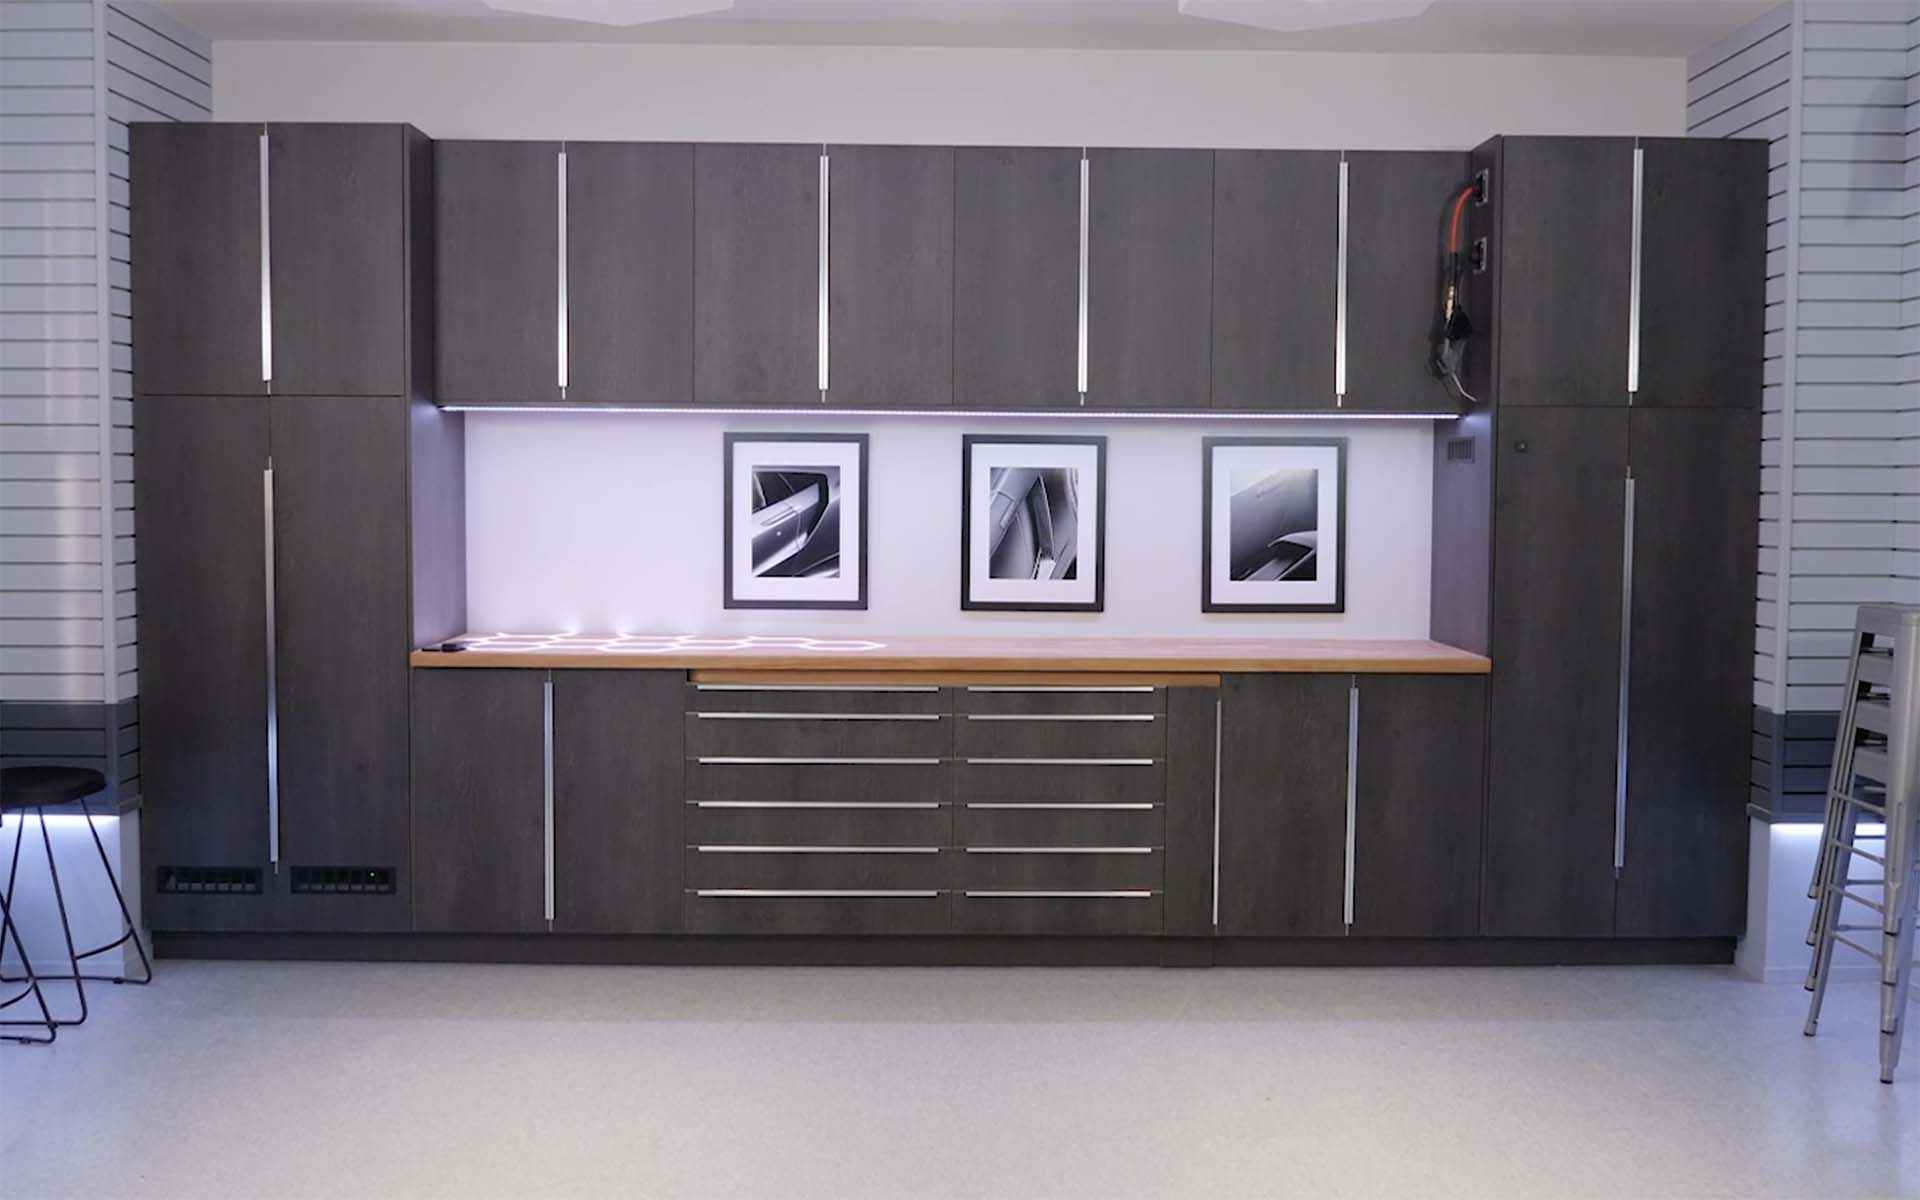 Diy Garage Storage Cabinets  Free Building Plans Story - Tidbits